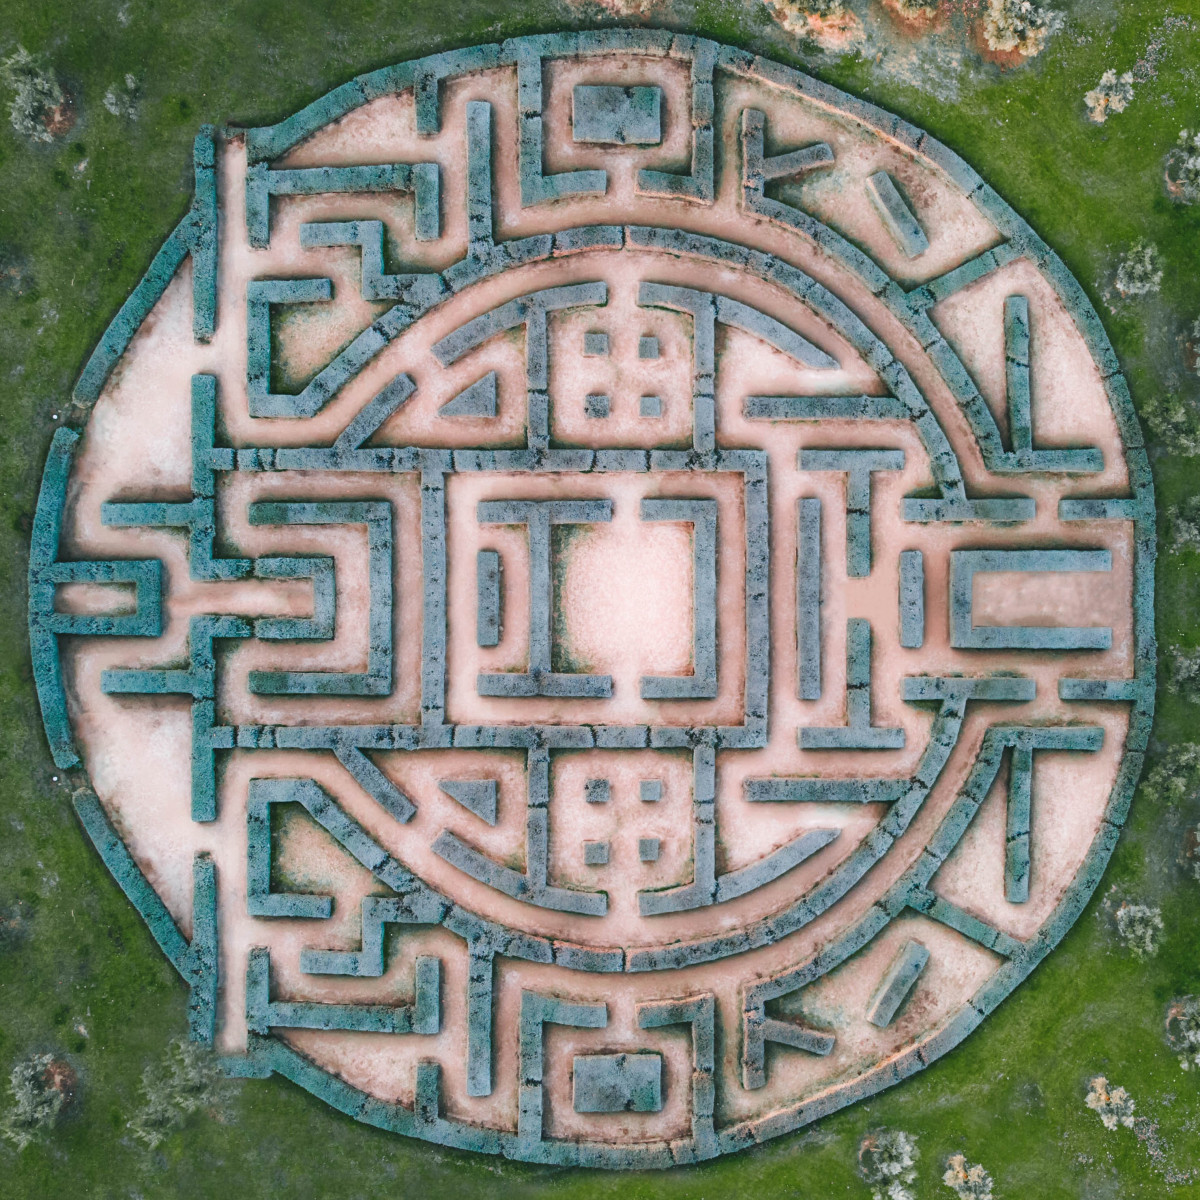 An aerial view of a garden maze